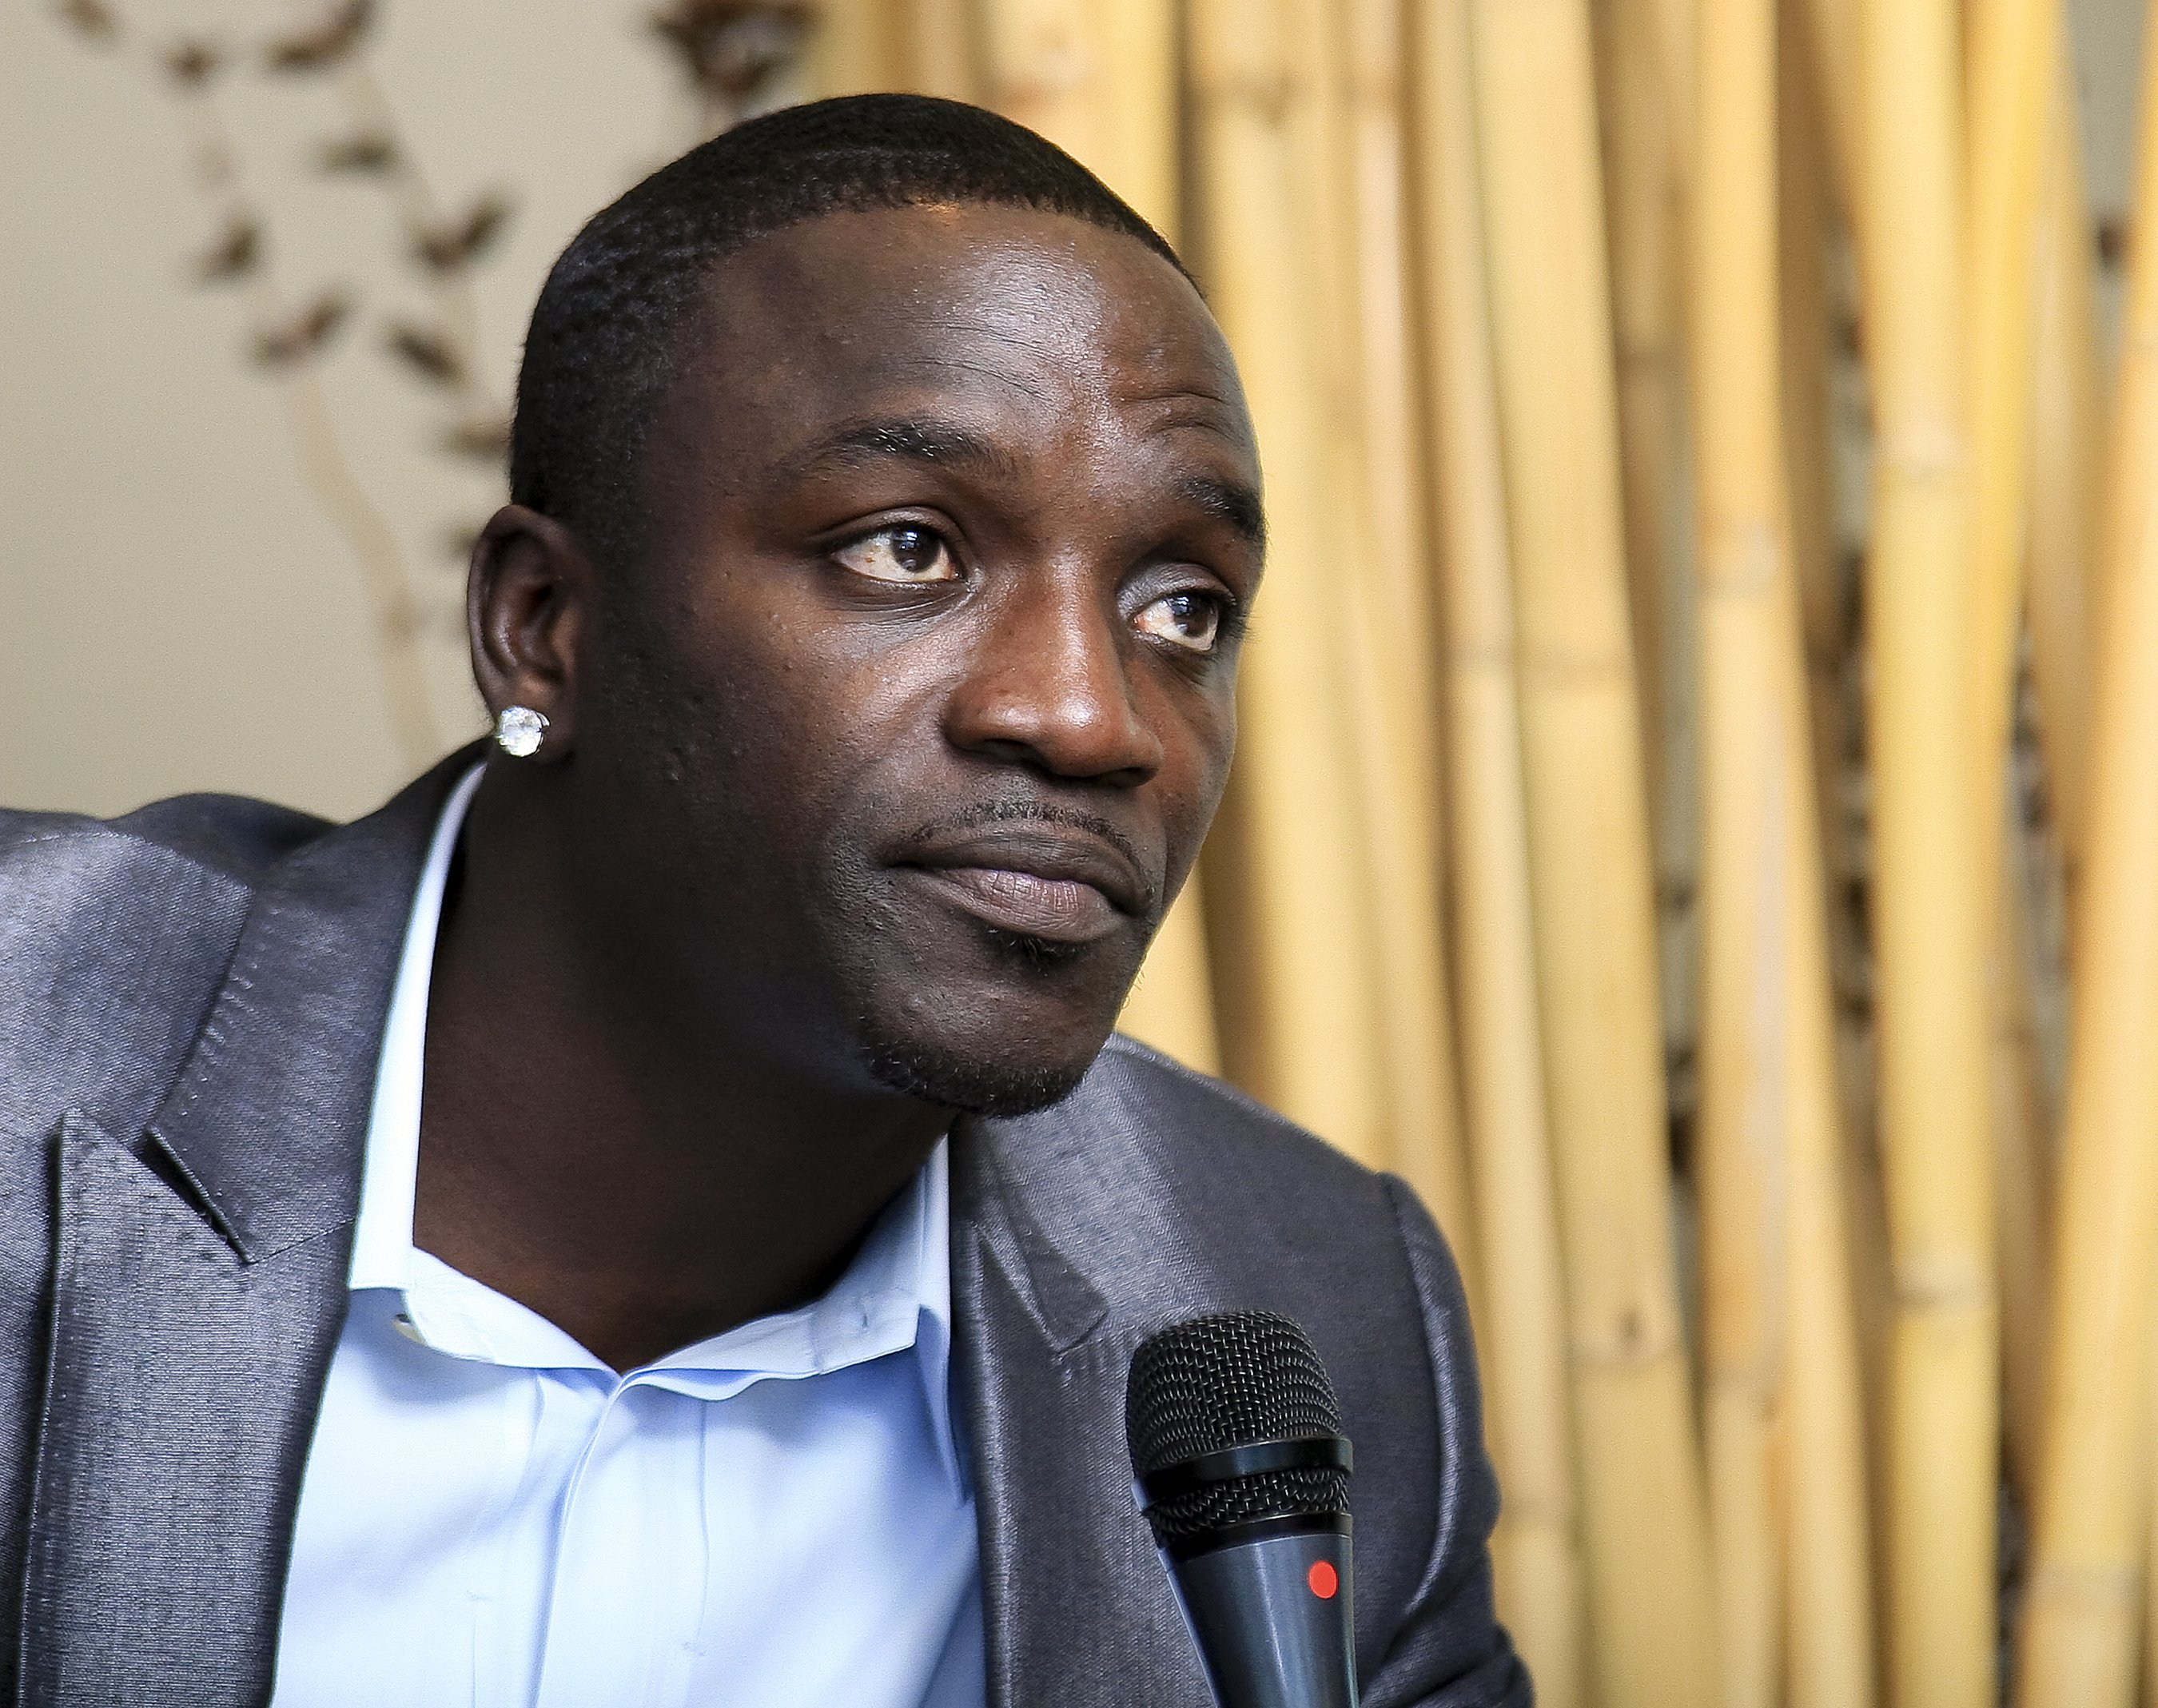 World-famous singer Akon gets hair transplant in Türkiye | Daily Sabah